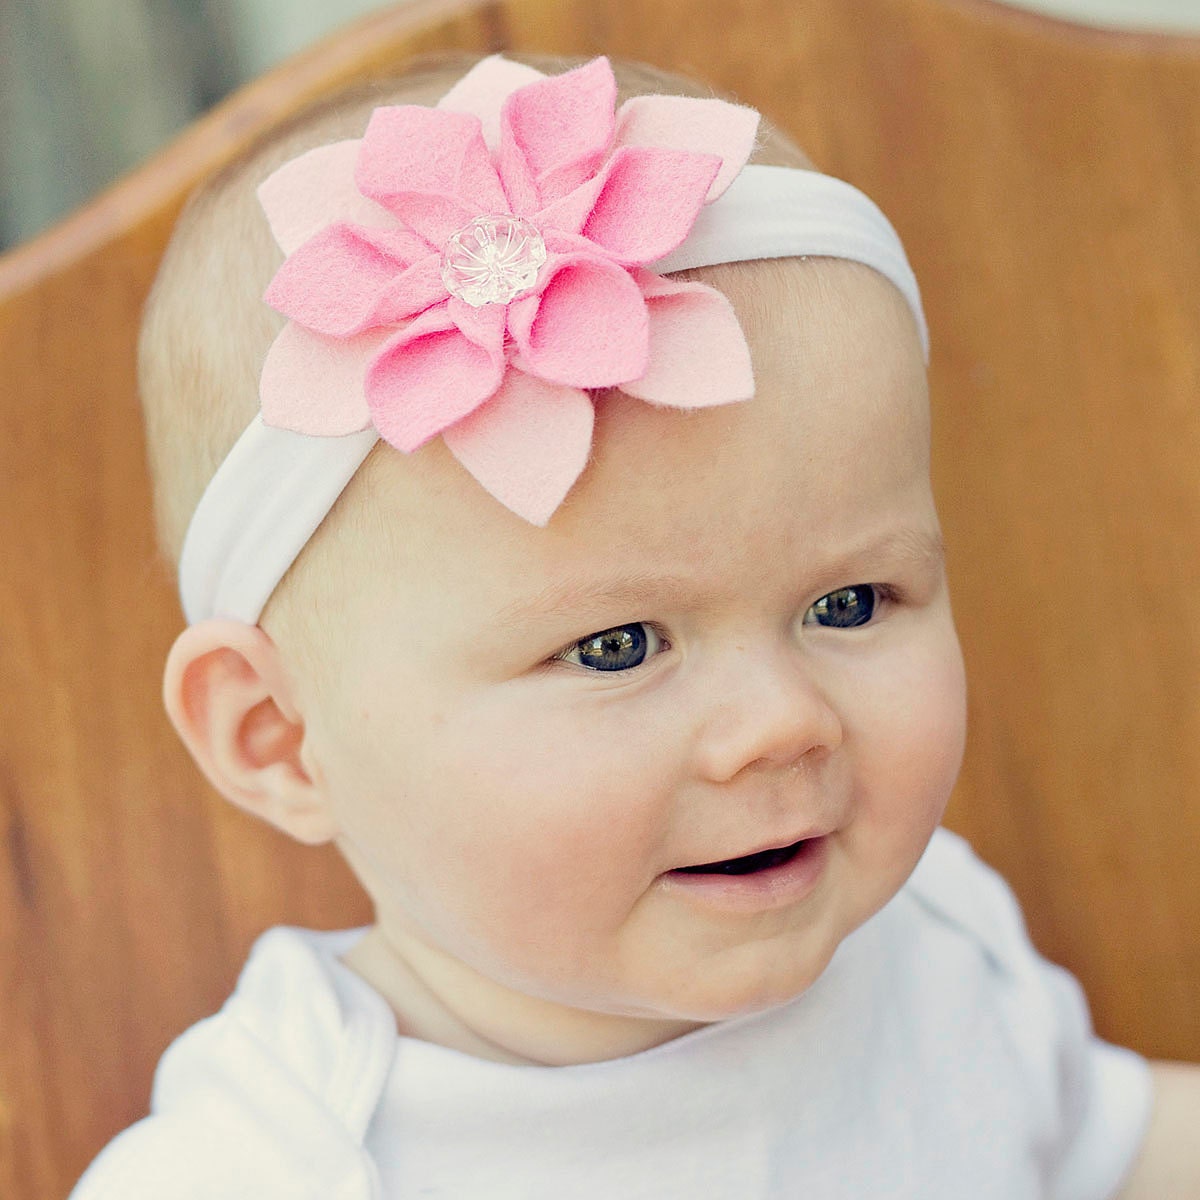 Baby Glam Felt Flower Headband - Baby-Toddler